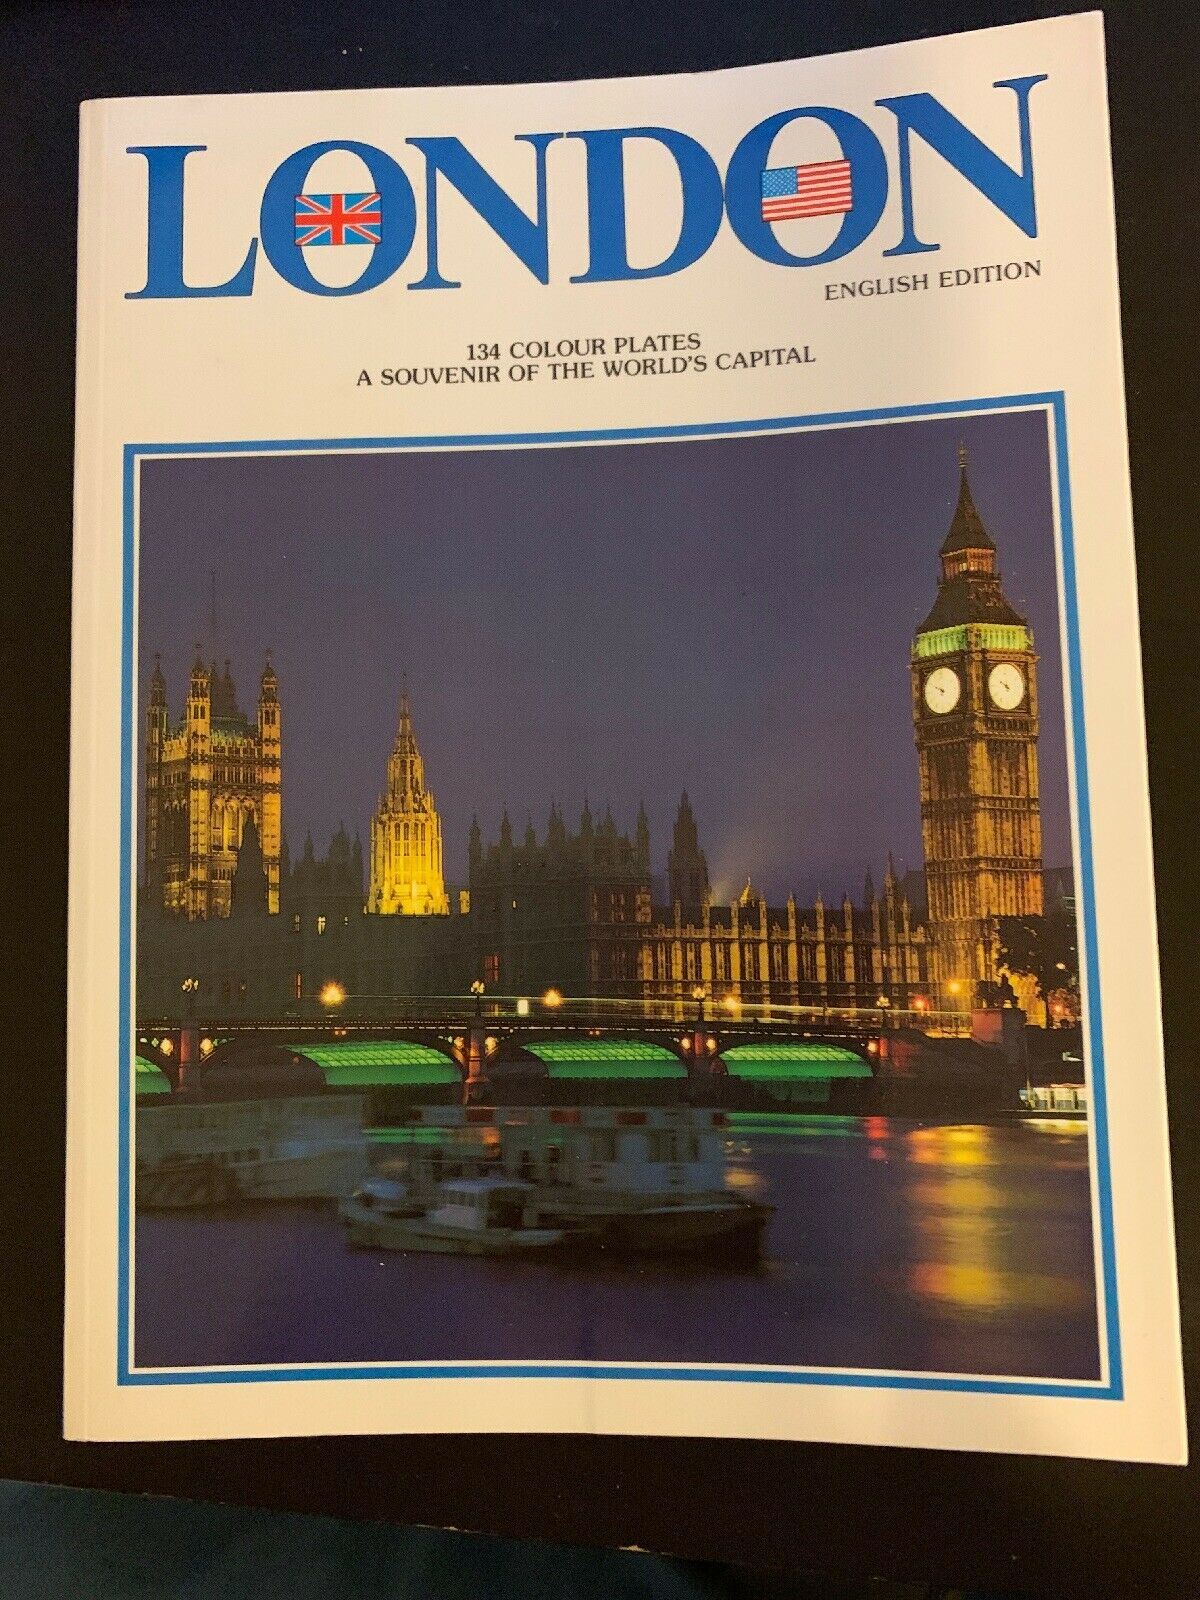 London 134 Colour Plates A Souvenir Of The World's Capital 1991